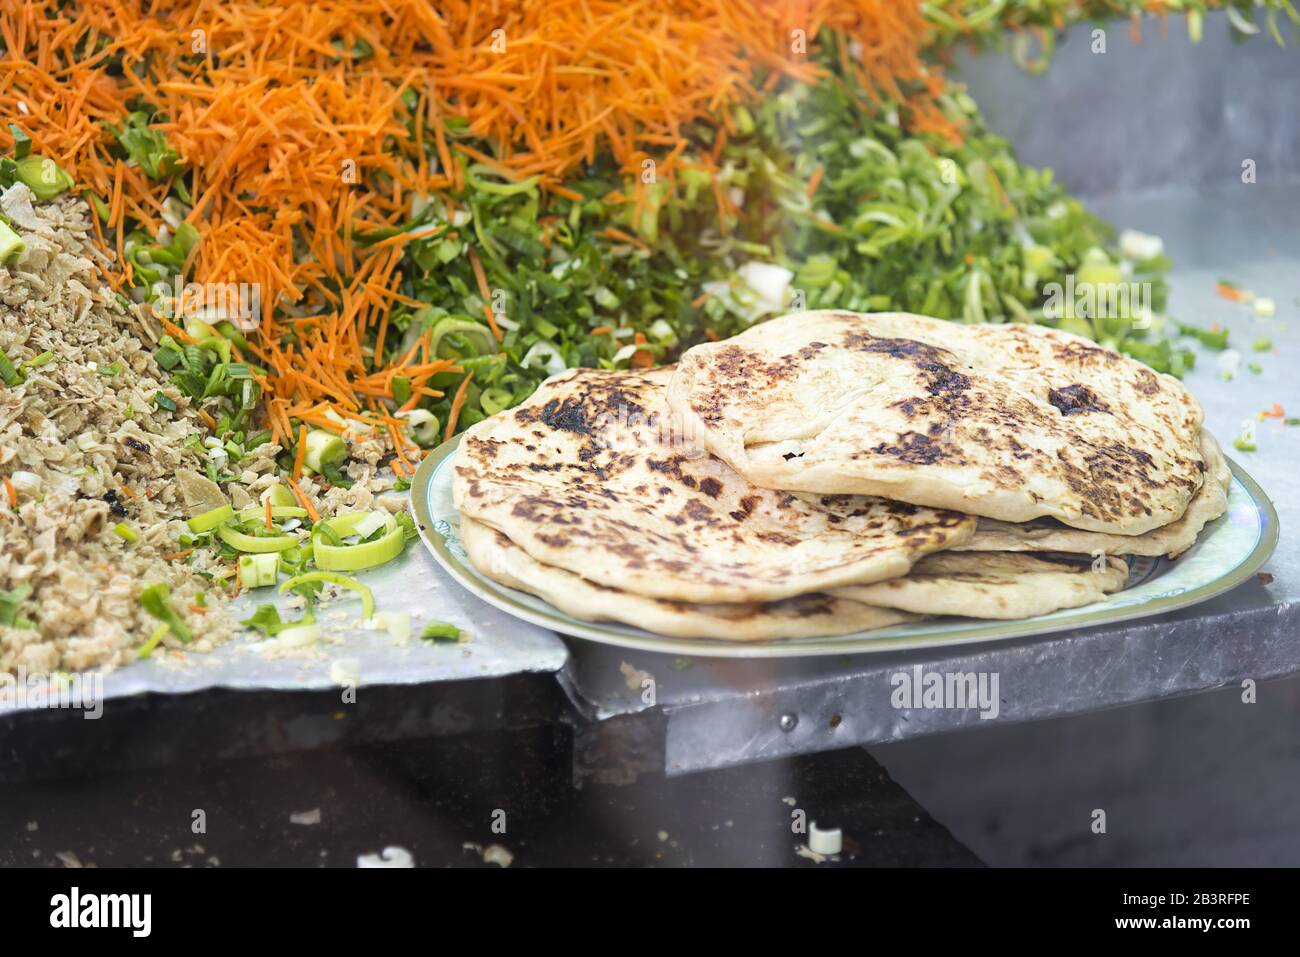 Nuwara Eliya, Sri Lanka: Un Fast-food traditionnel vendant du pain plat et des légumes. Banque D'Images